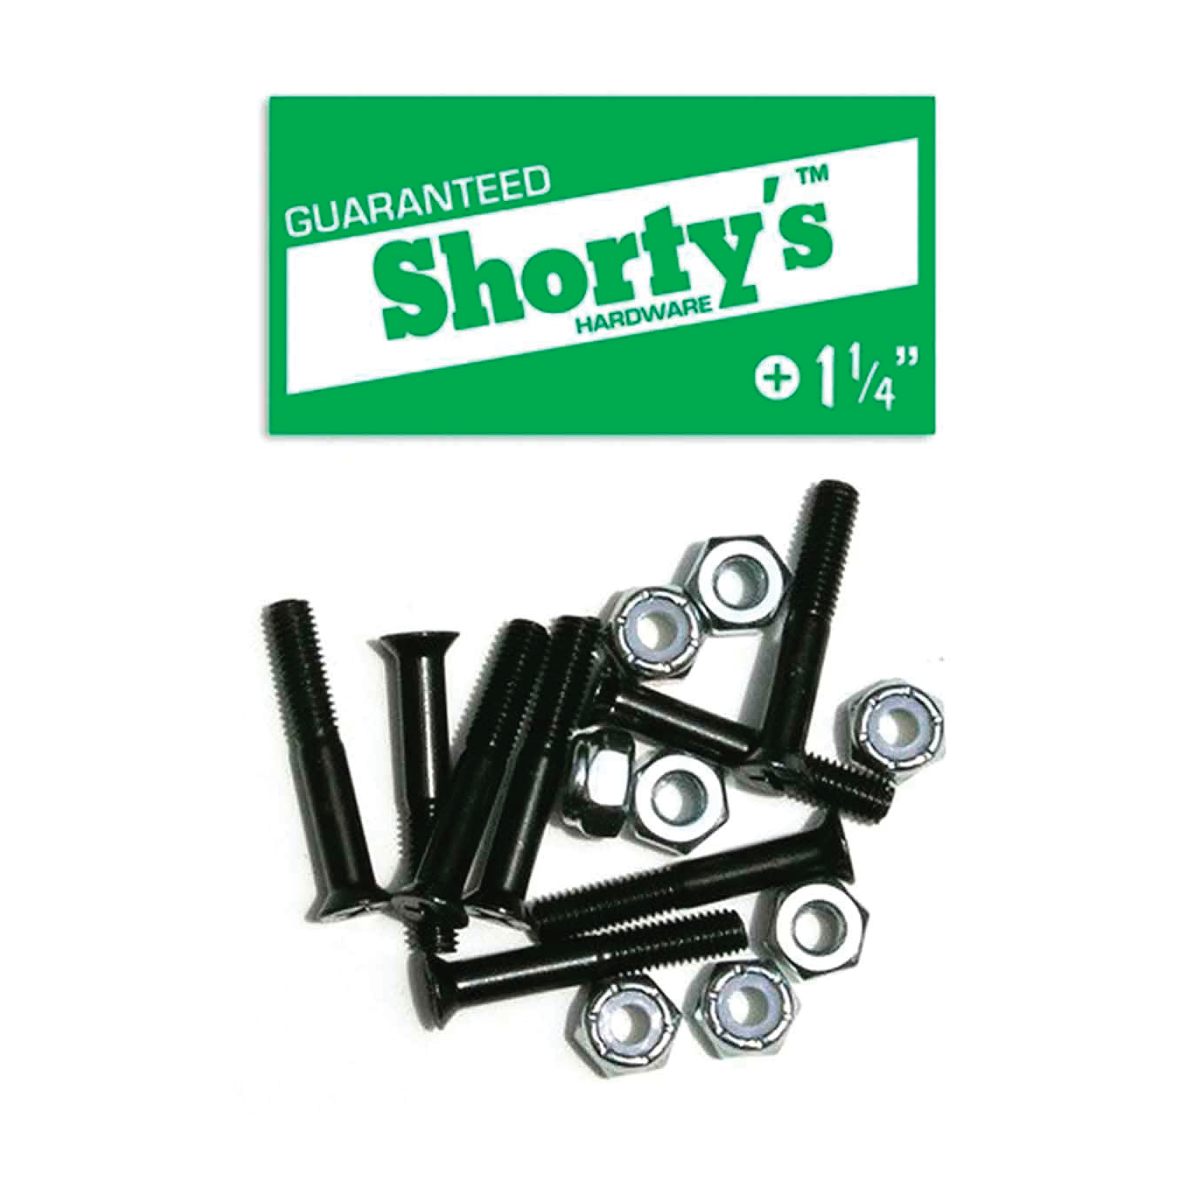 Shortys 1 1/4" Phillips Hardware